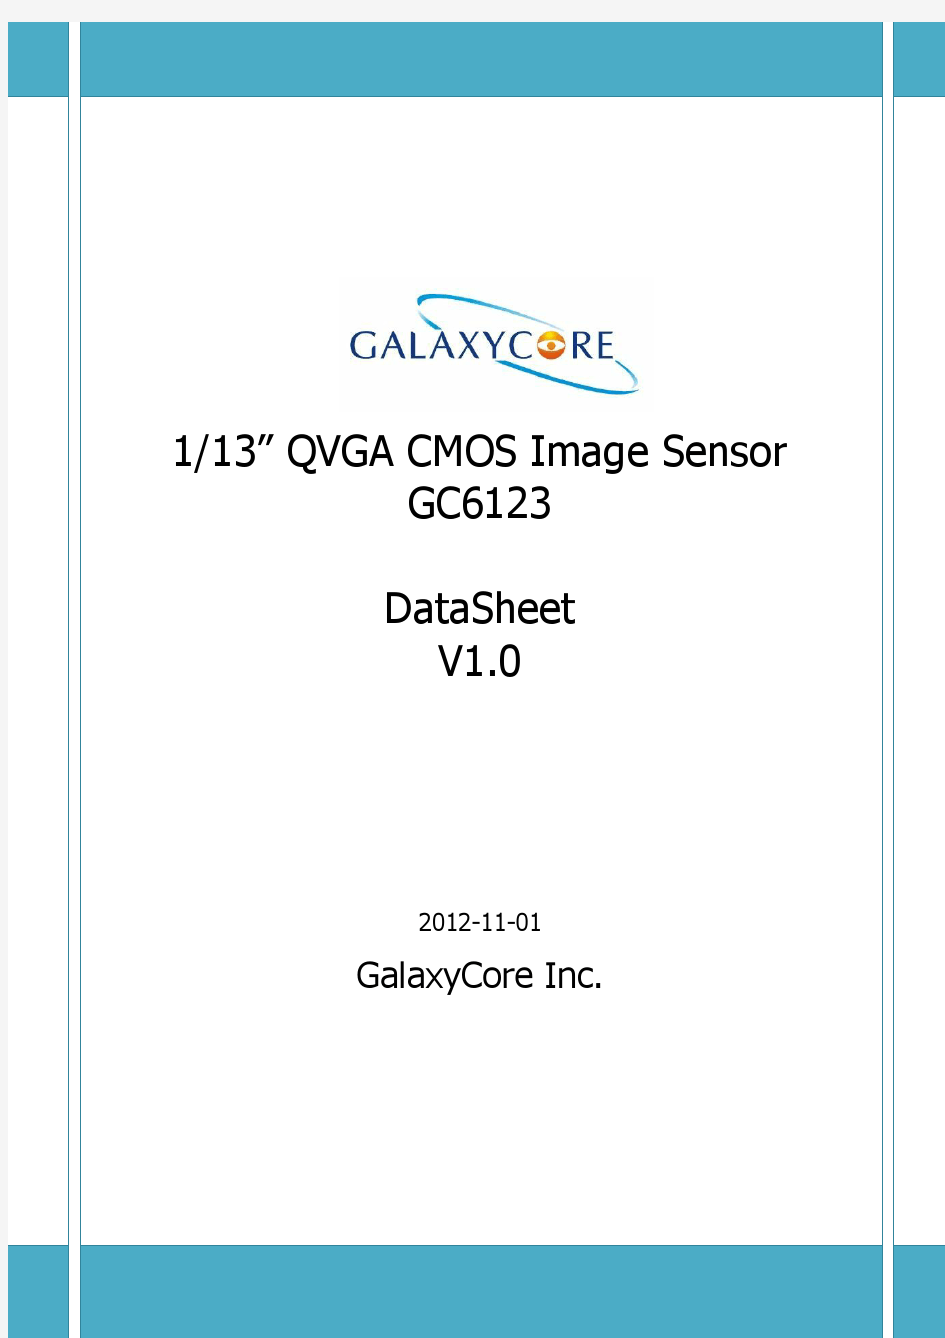 GC6123 DataSheet V1.0